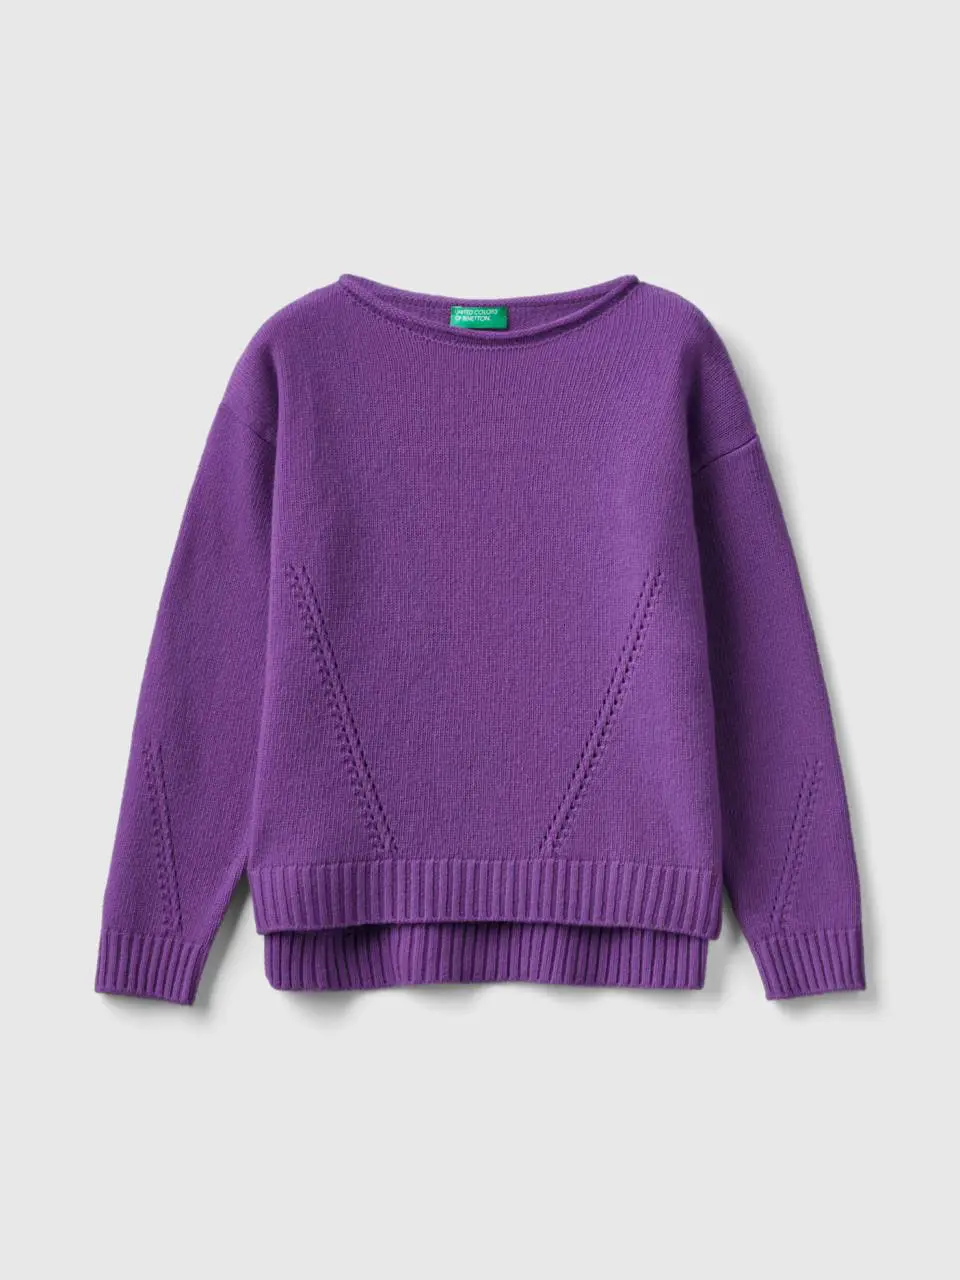 Benetton knit sweater with playful stitching. 1